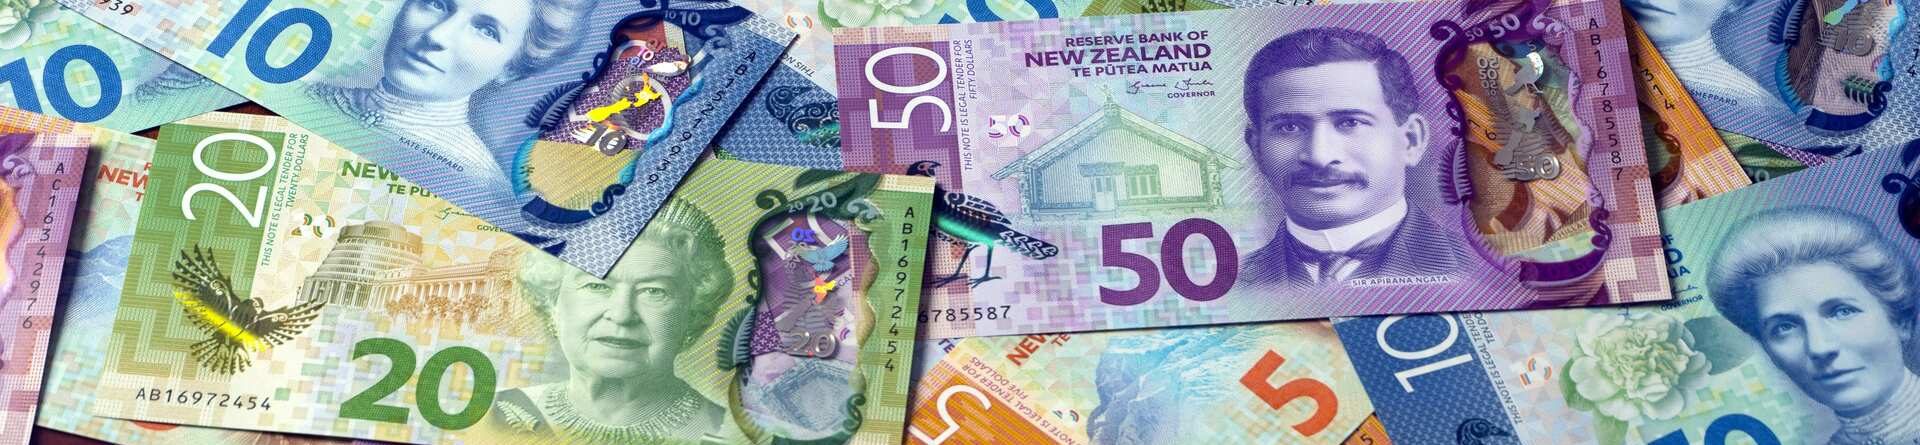 Transferring Money to New Zealand